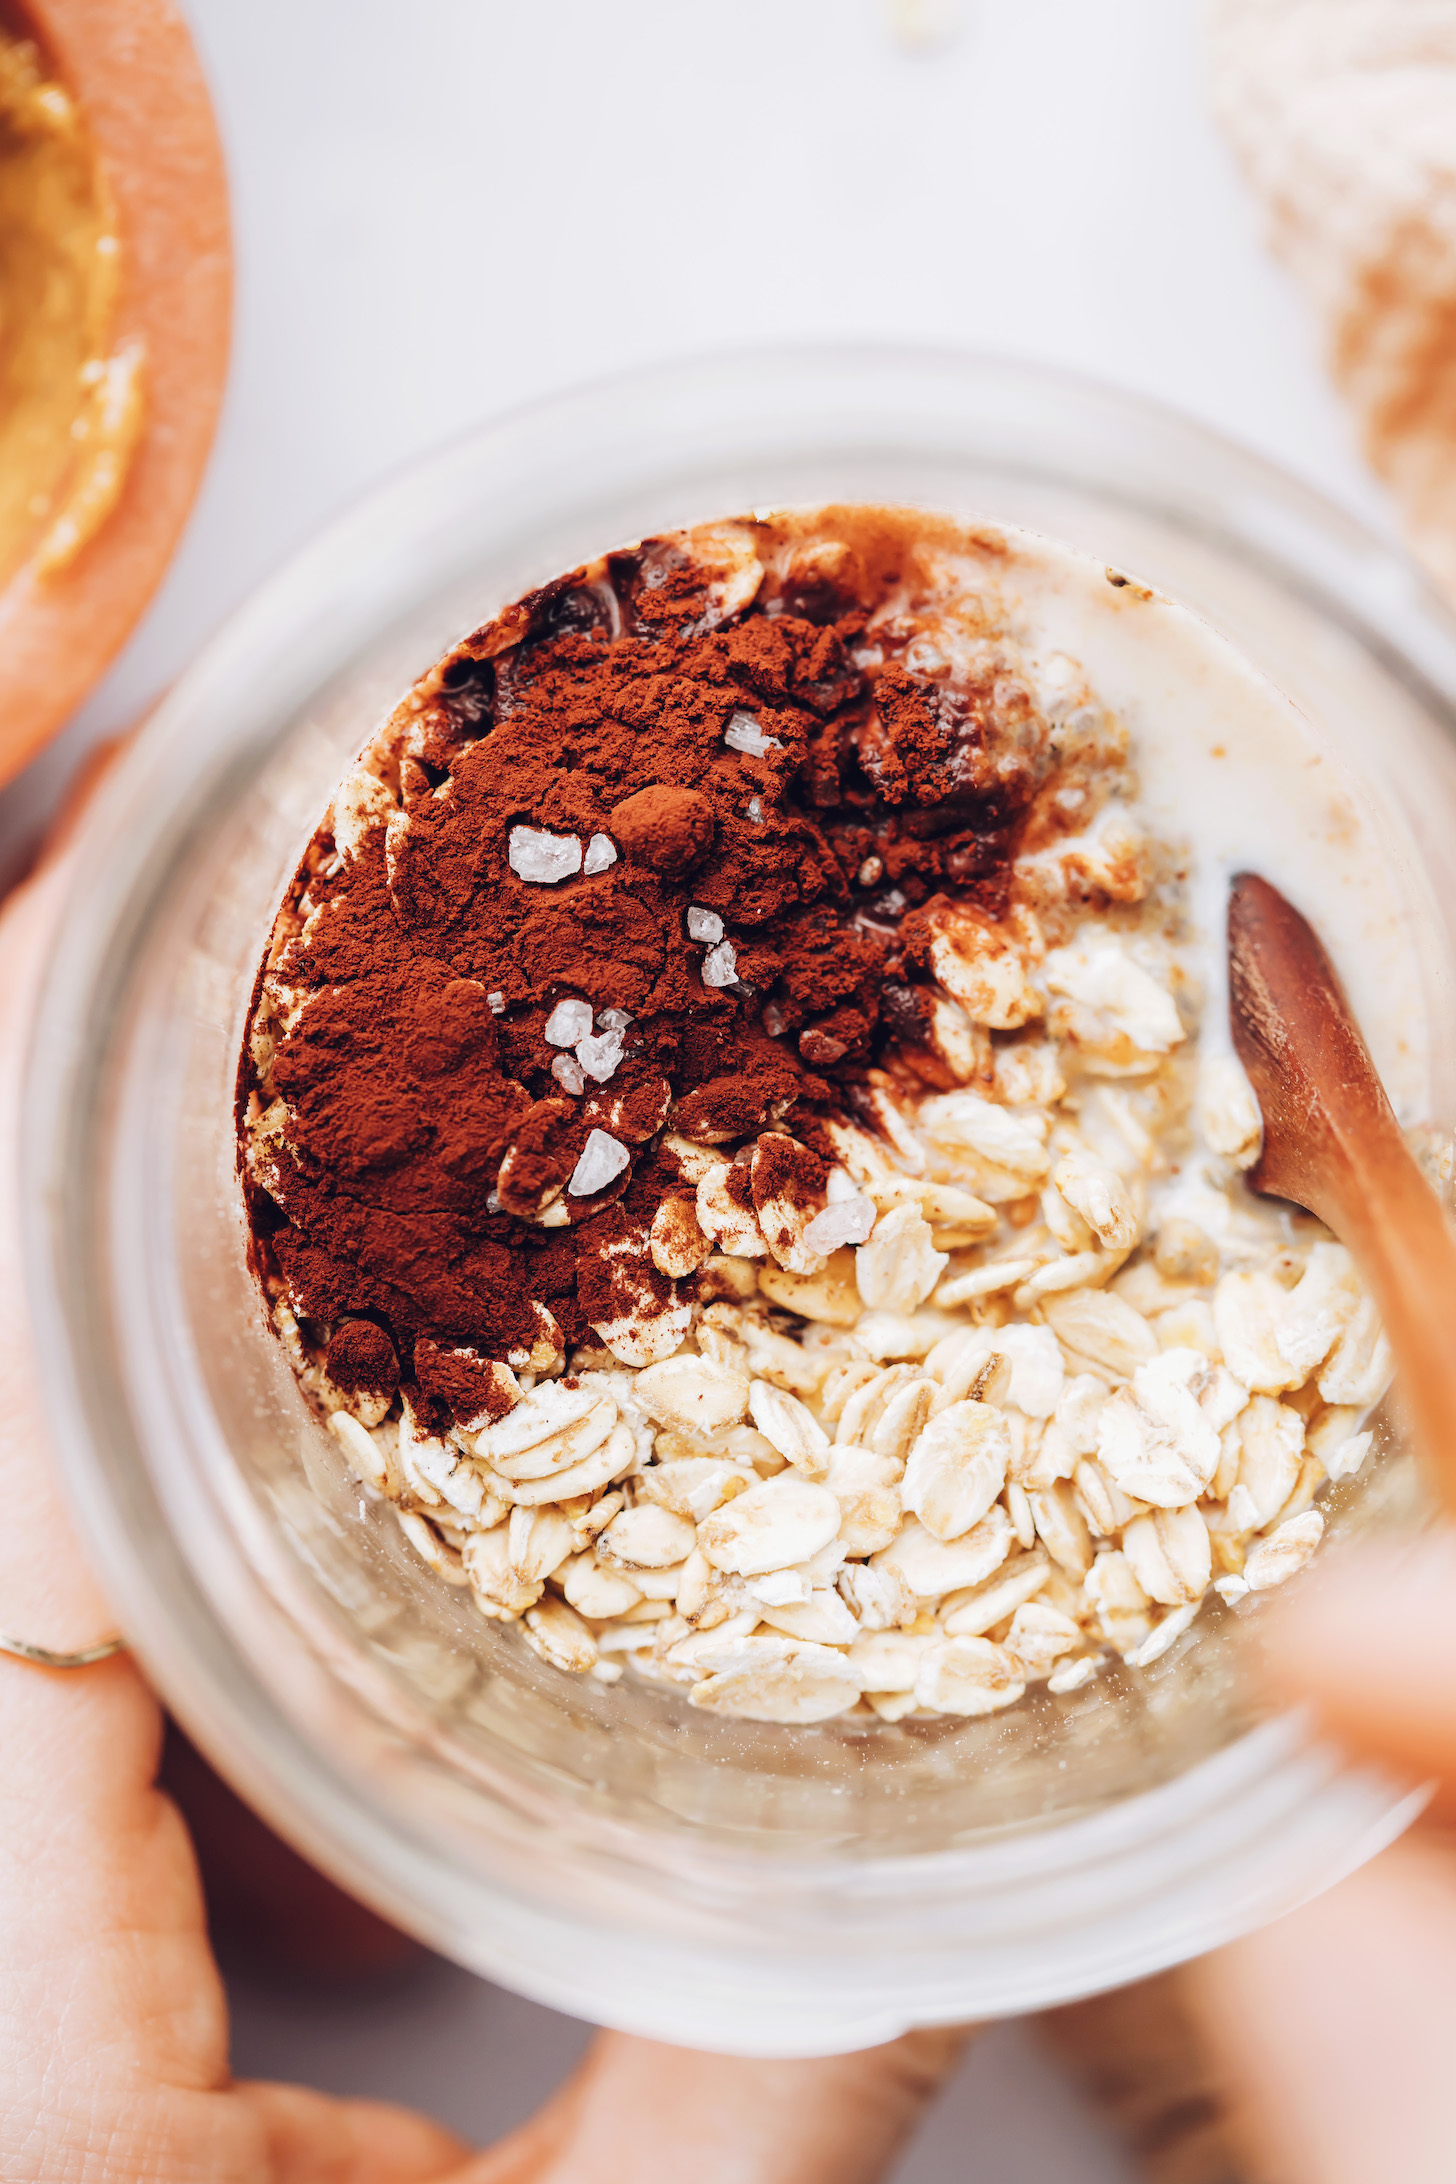 Roll oats, cocoa powder ուշ almond milk in a container